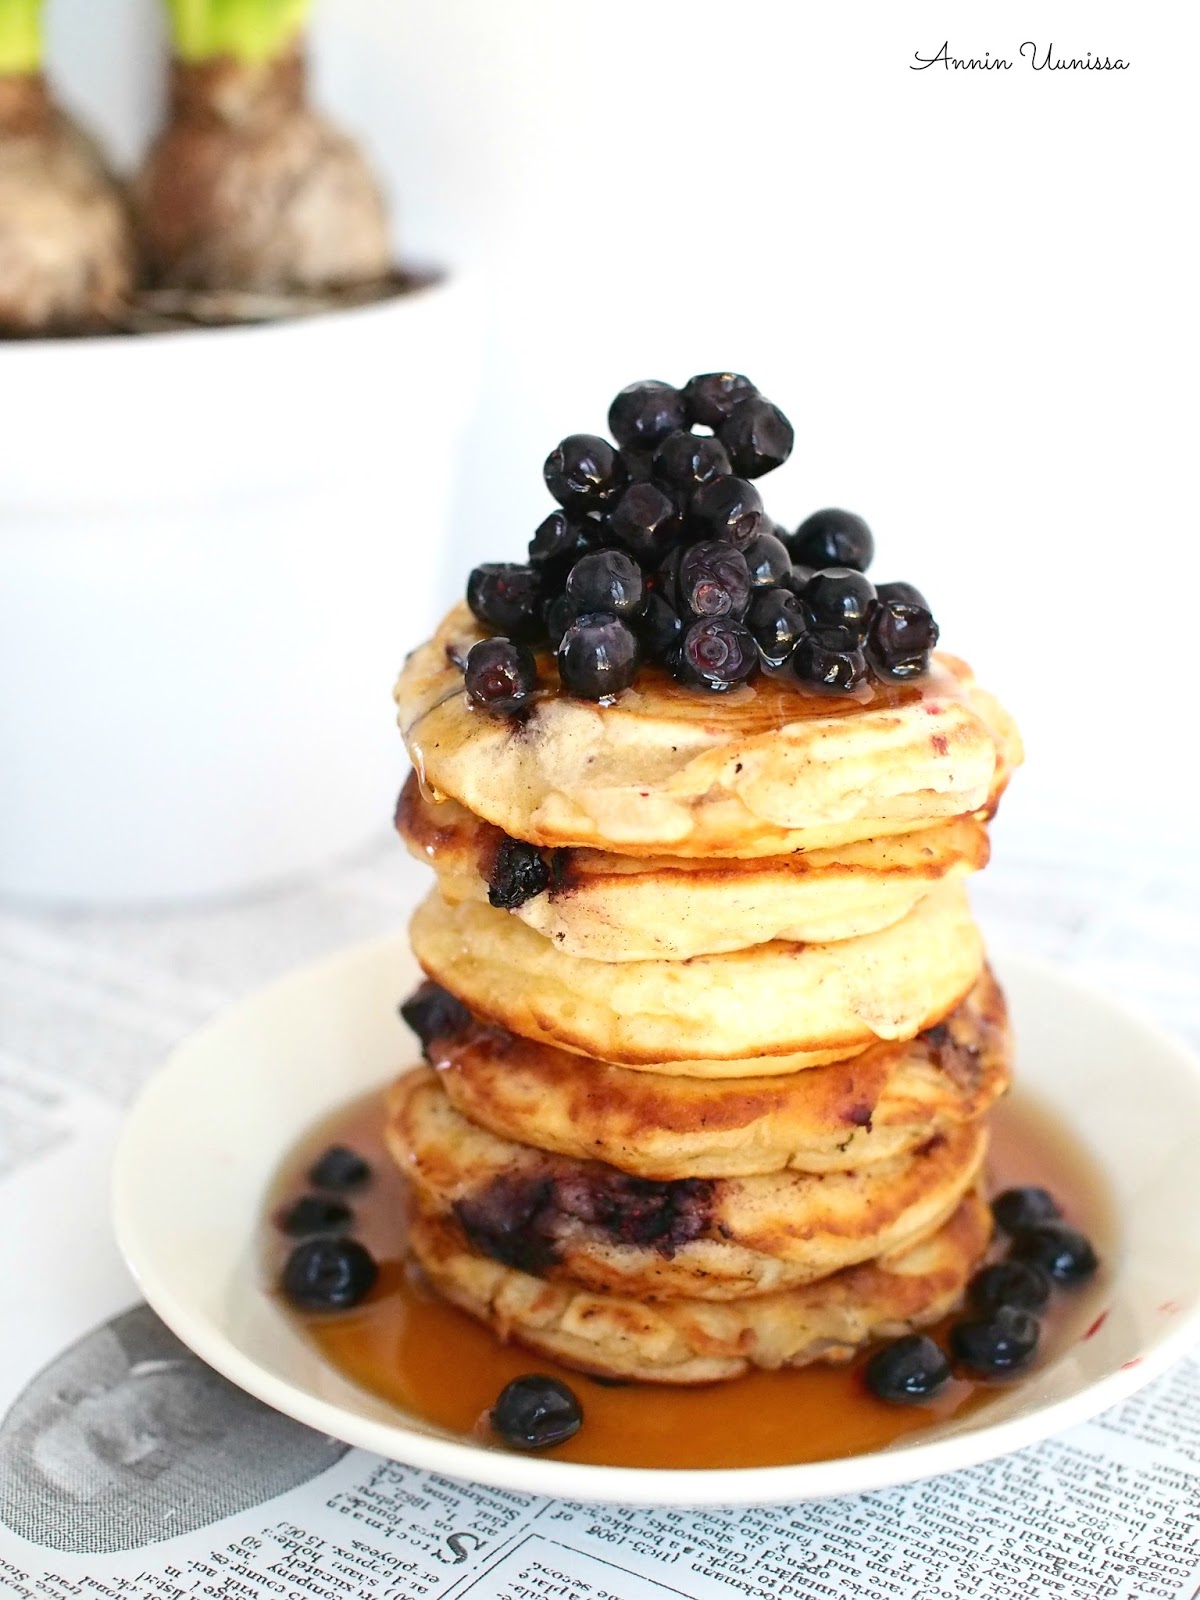 Share 61 kuva mustikka pancakes